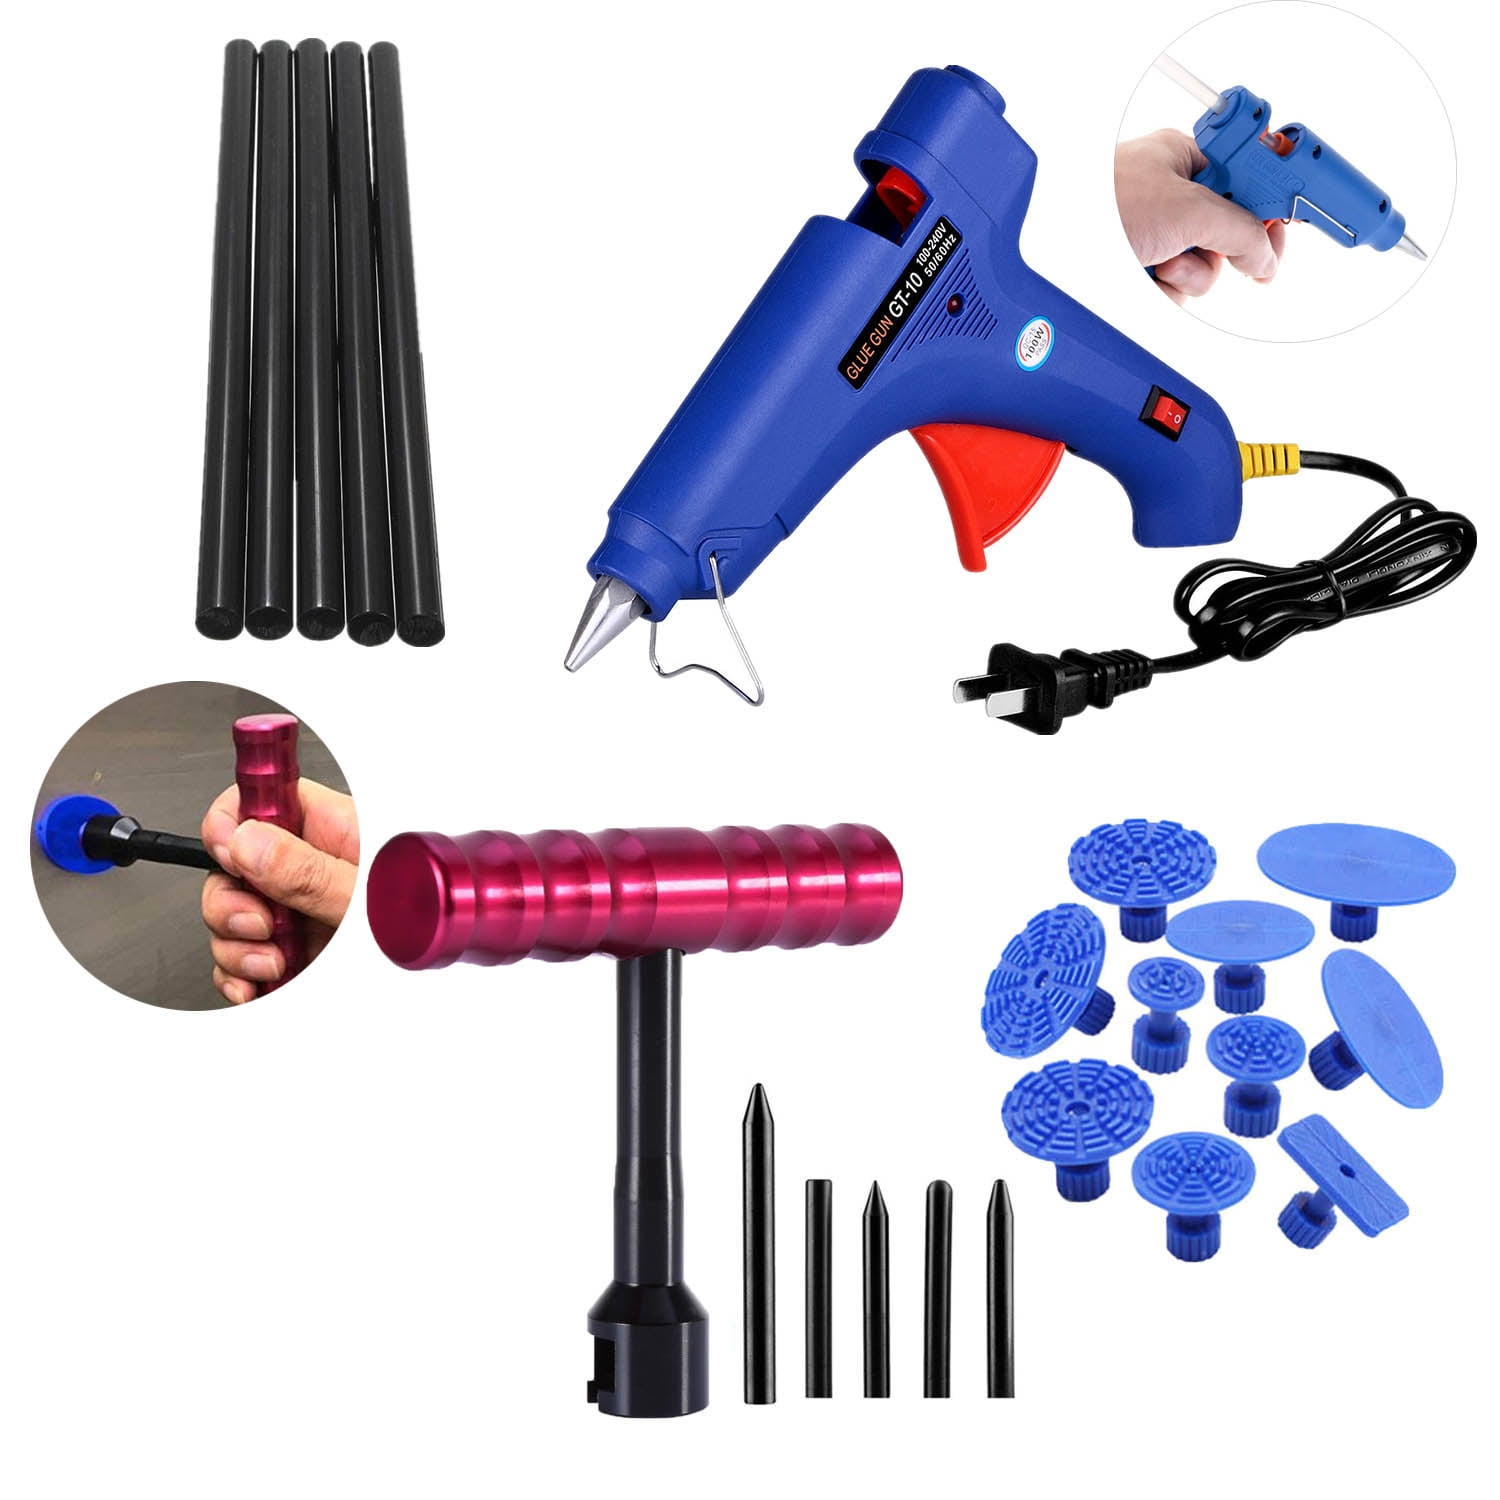 PDR Hot Glue Gun+20 Glue Sticks Car Body Repair Paintless Dent Removal Tools Kit 